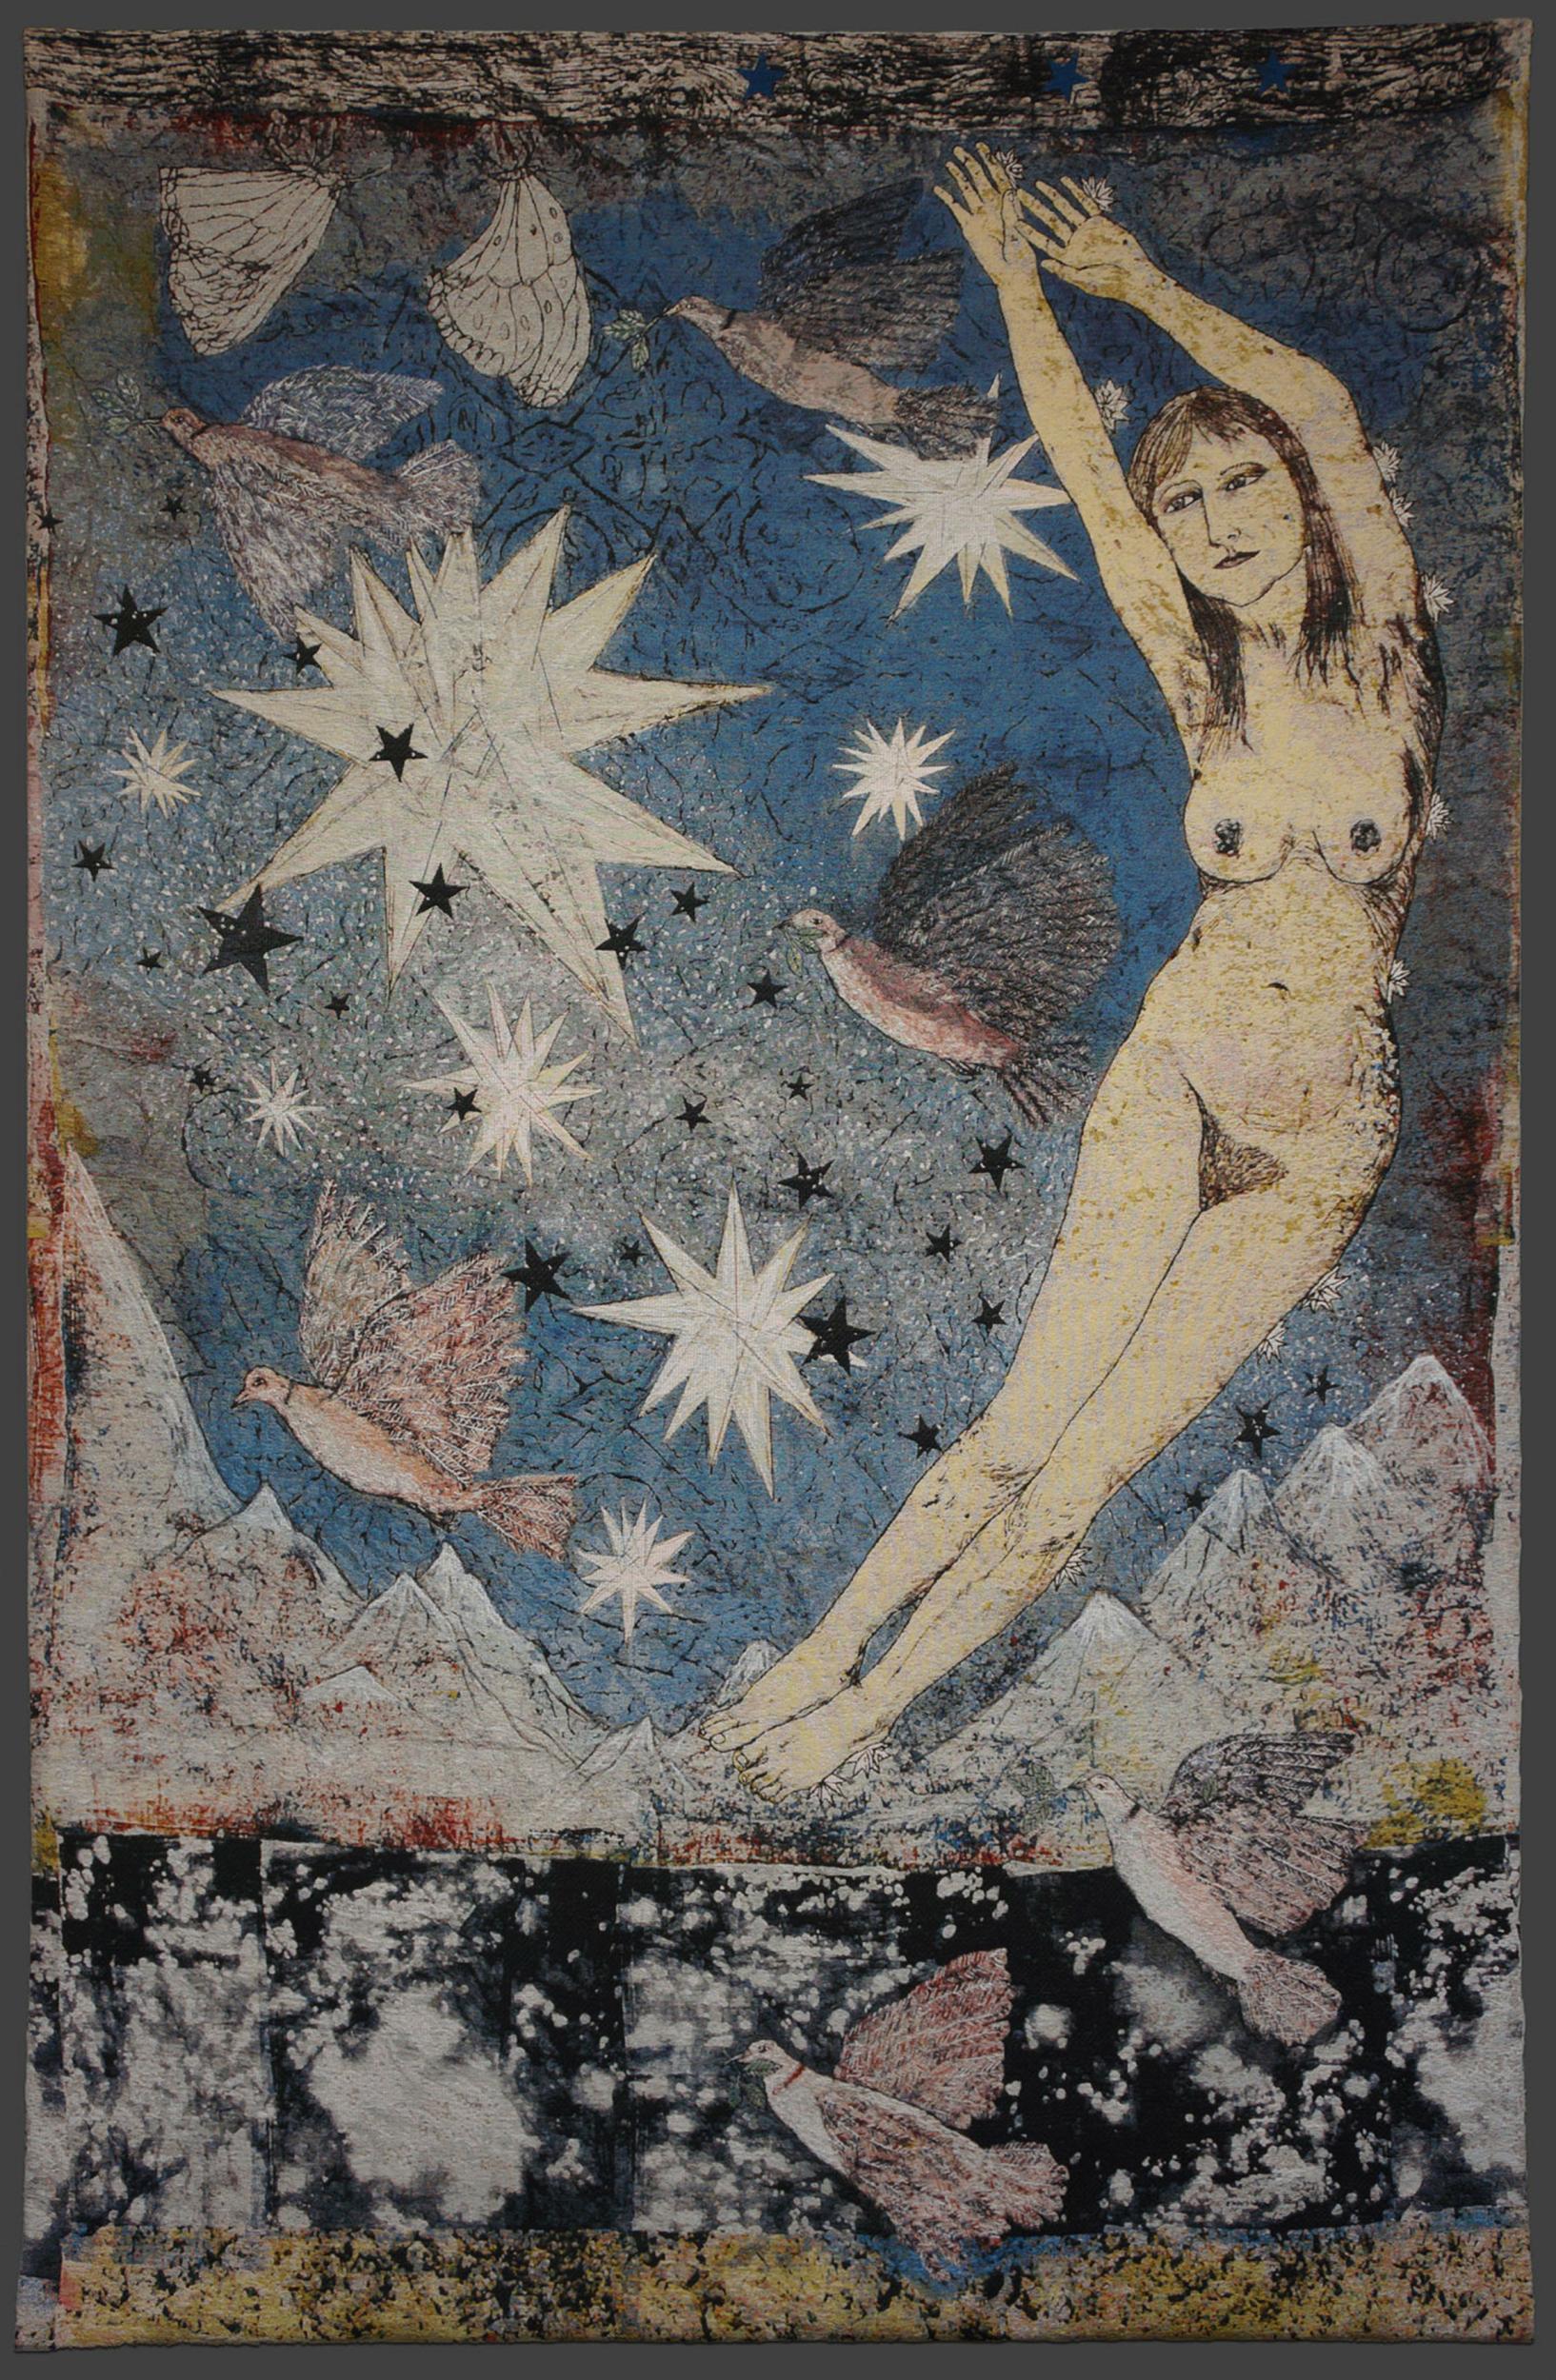 Kiki Smith, 'Sky', 287 x 190.5cm, Jacquard tapestry, 2012 (courtesy Timothy Taylor Gallery, London)